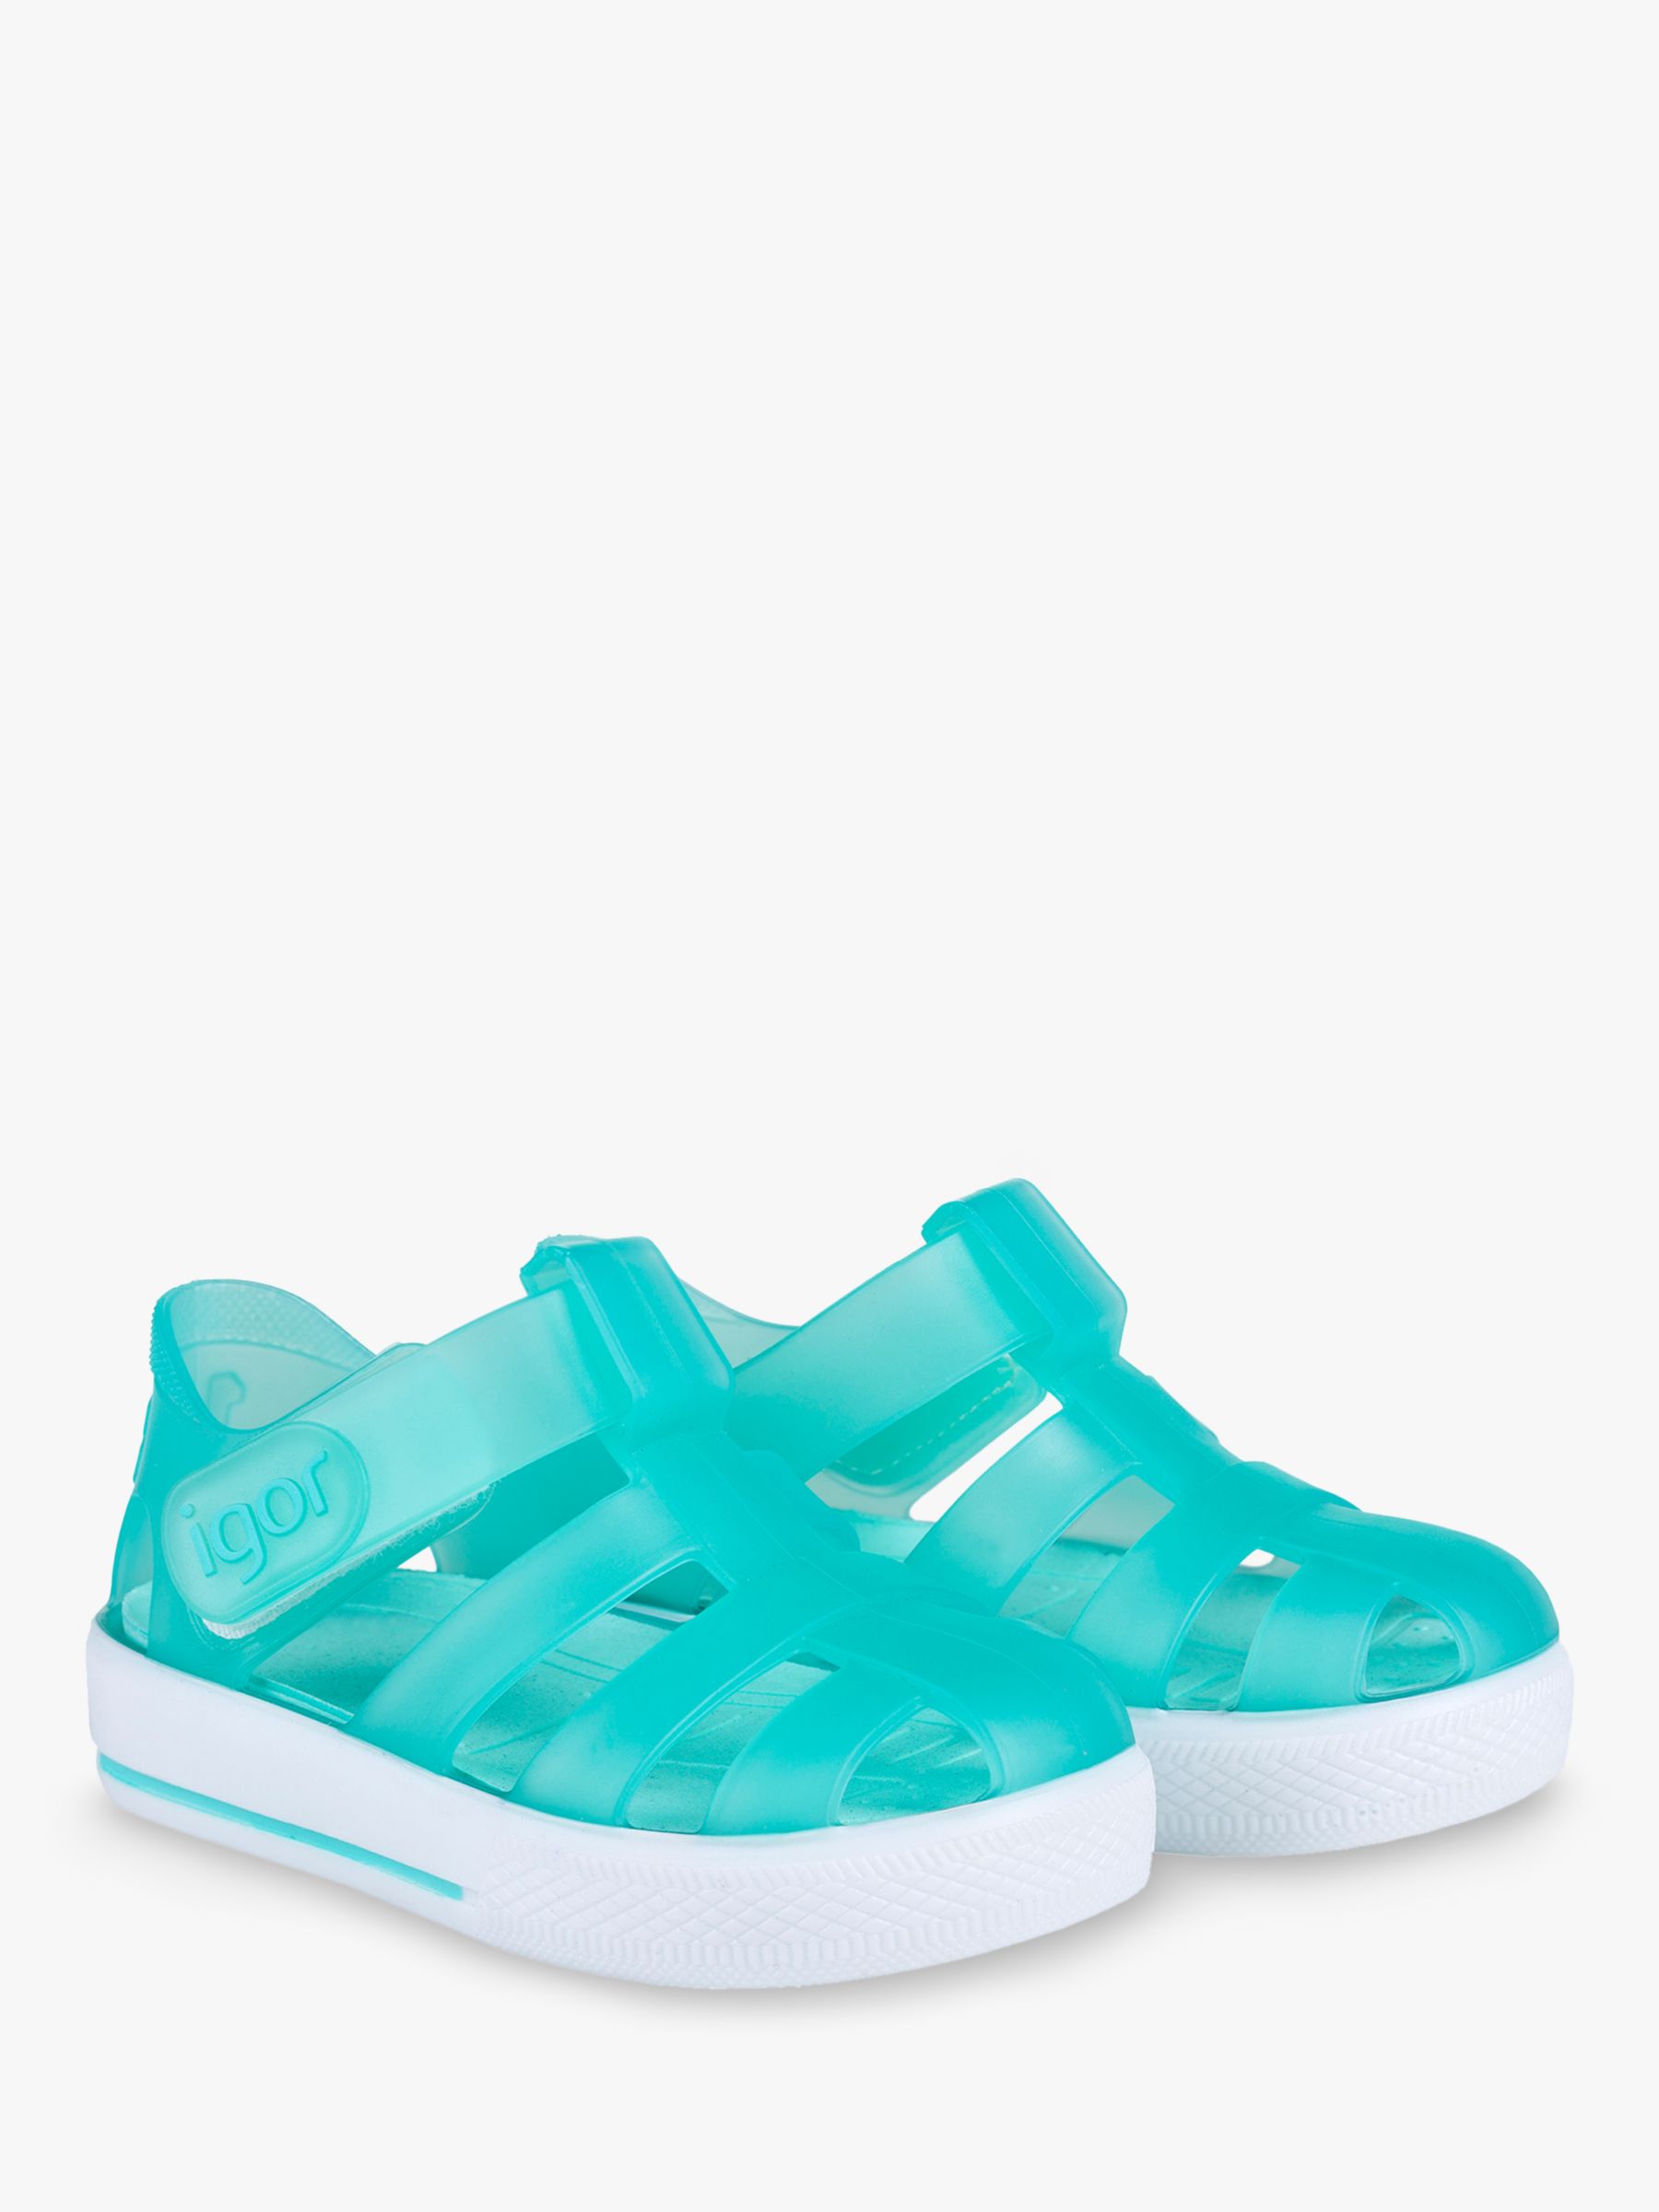 IGOR Kids' Star Jelly Sandals, Aquamarine, 19